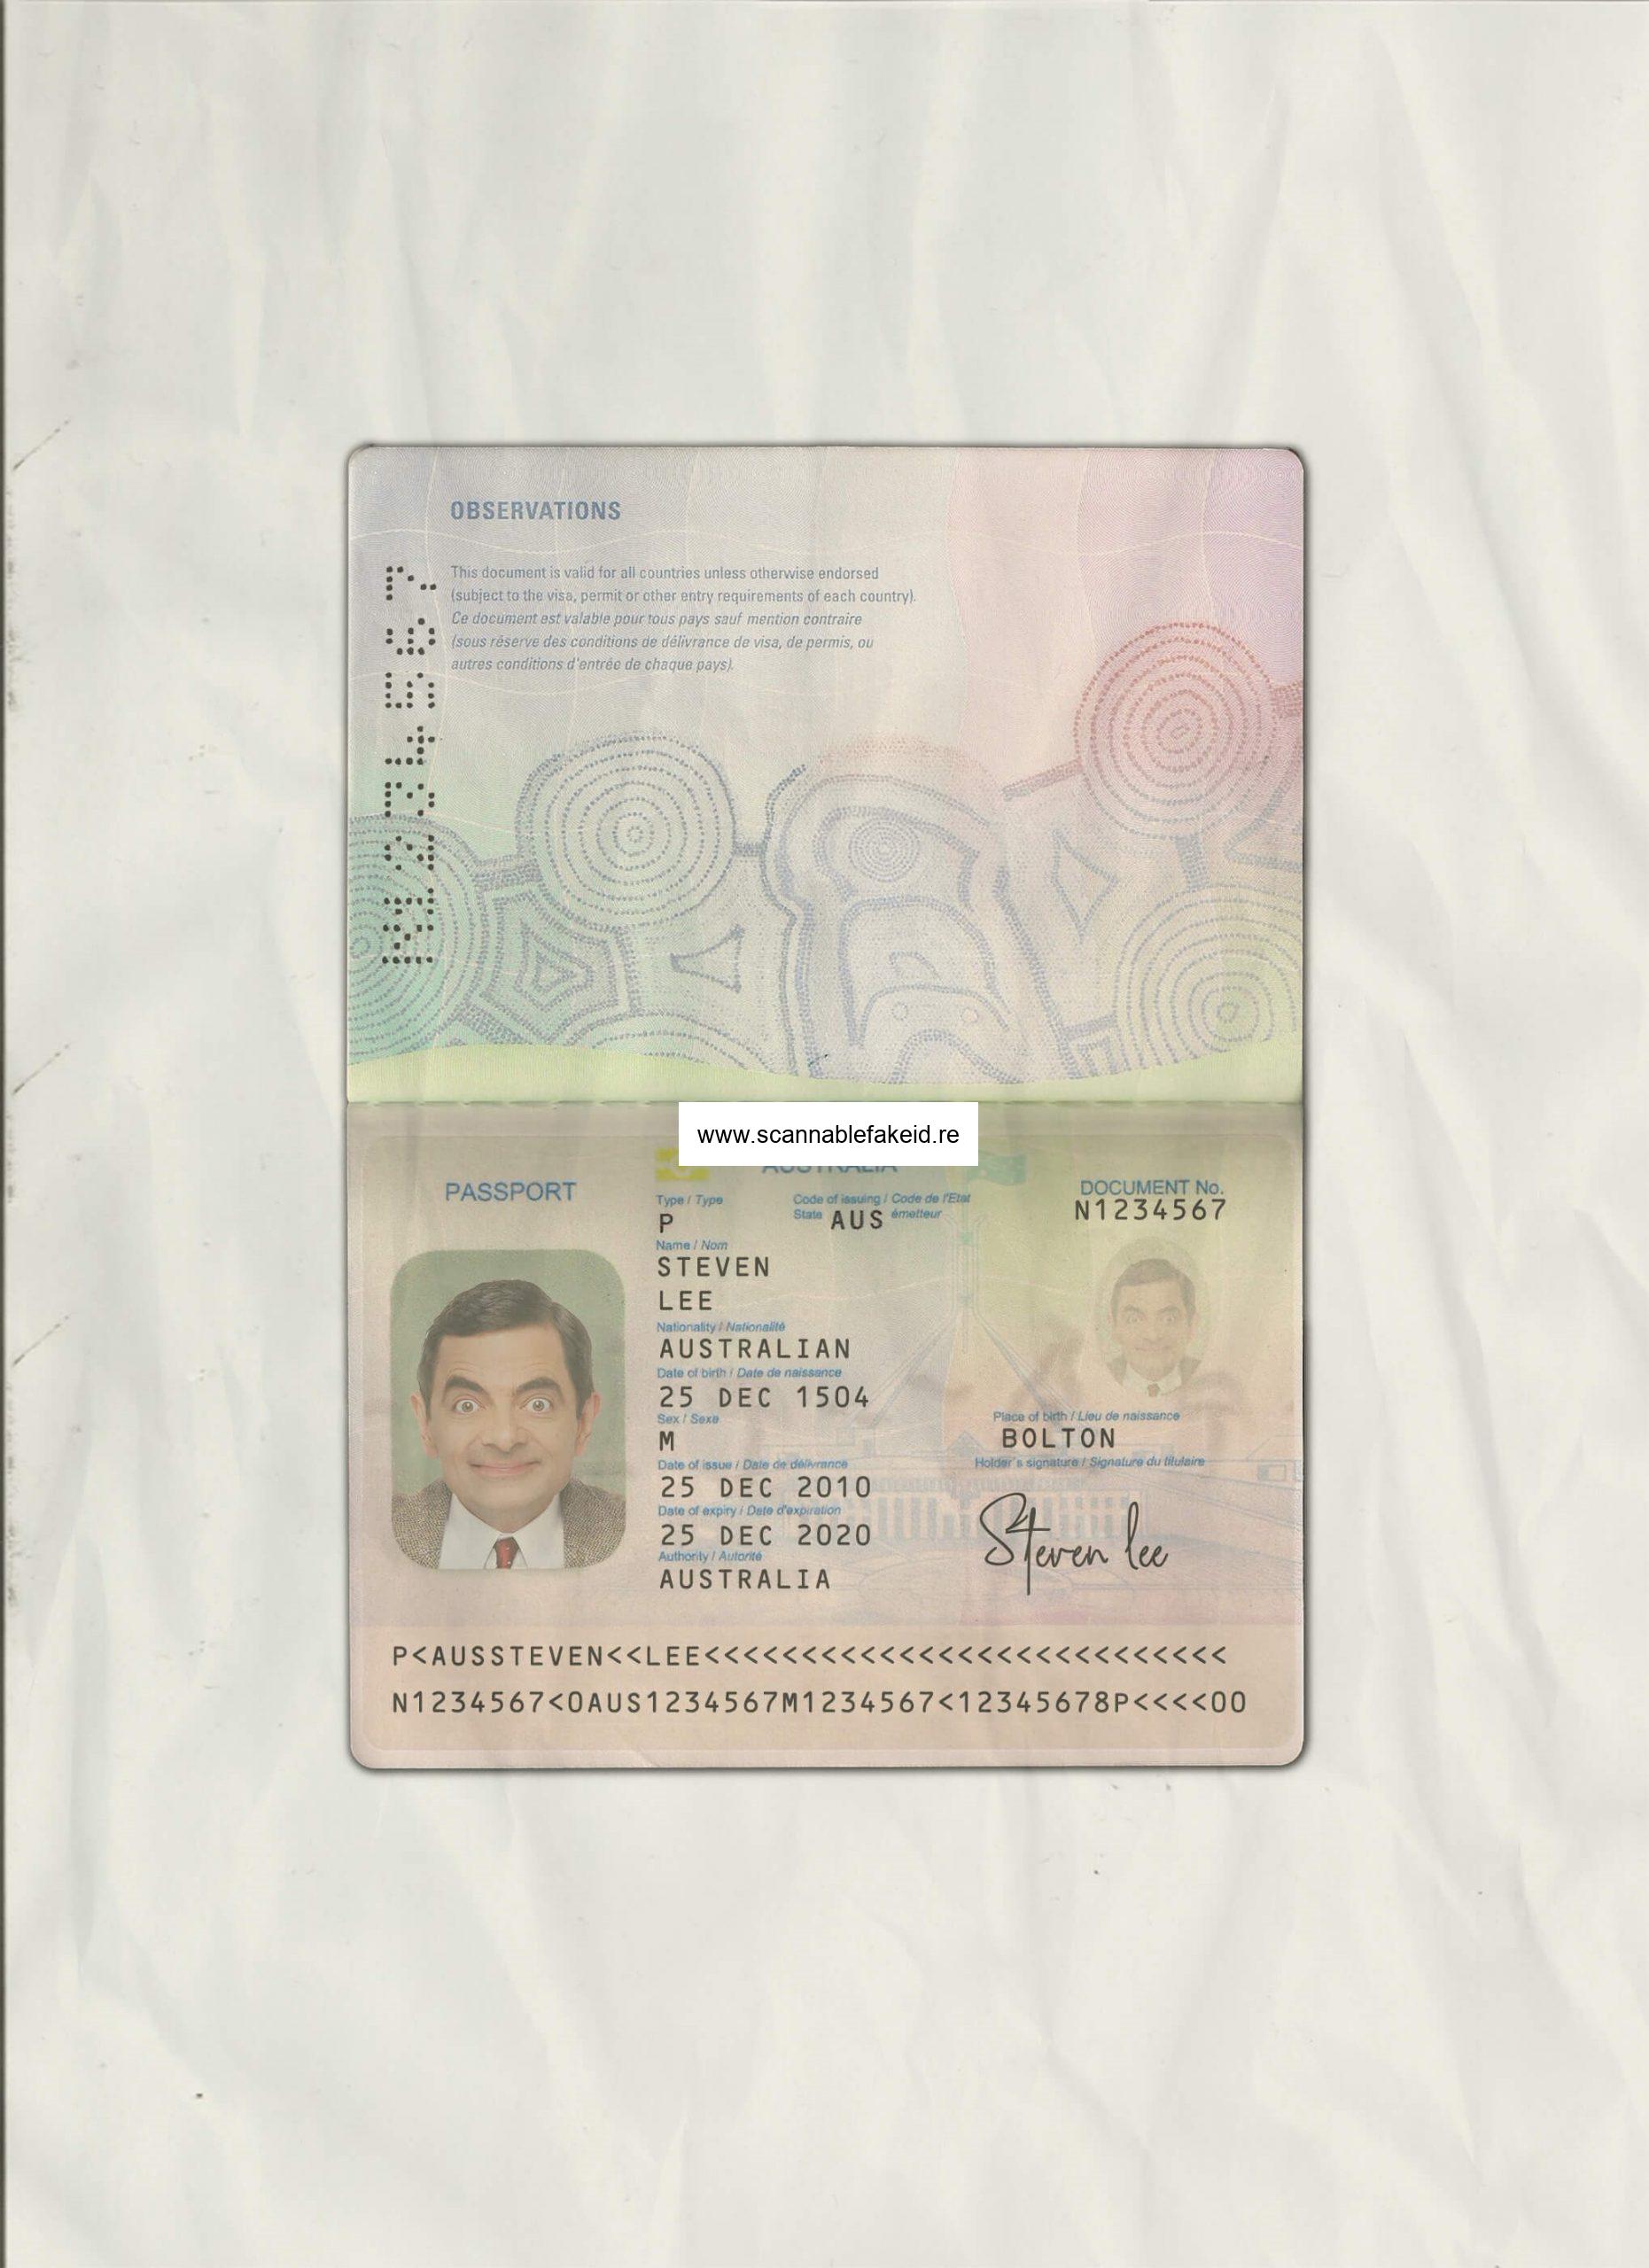 Austria Fake Passport - Buy Scannable Fake Id Online - Fake ID Website